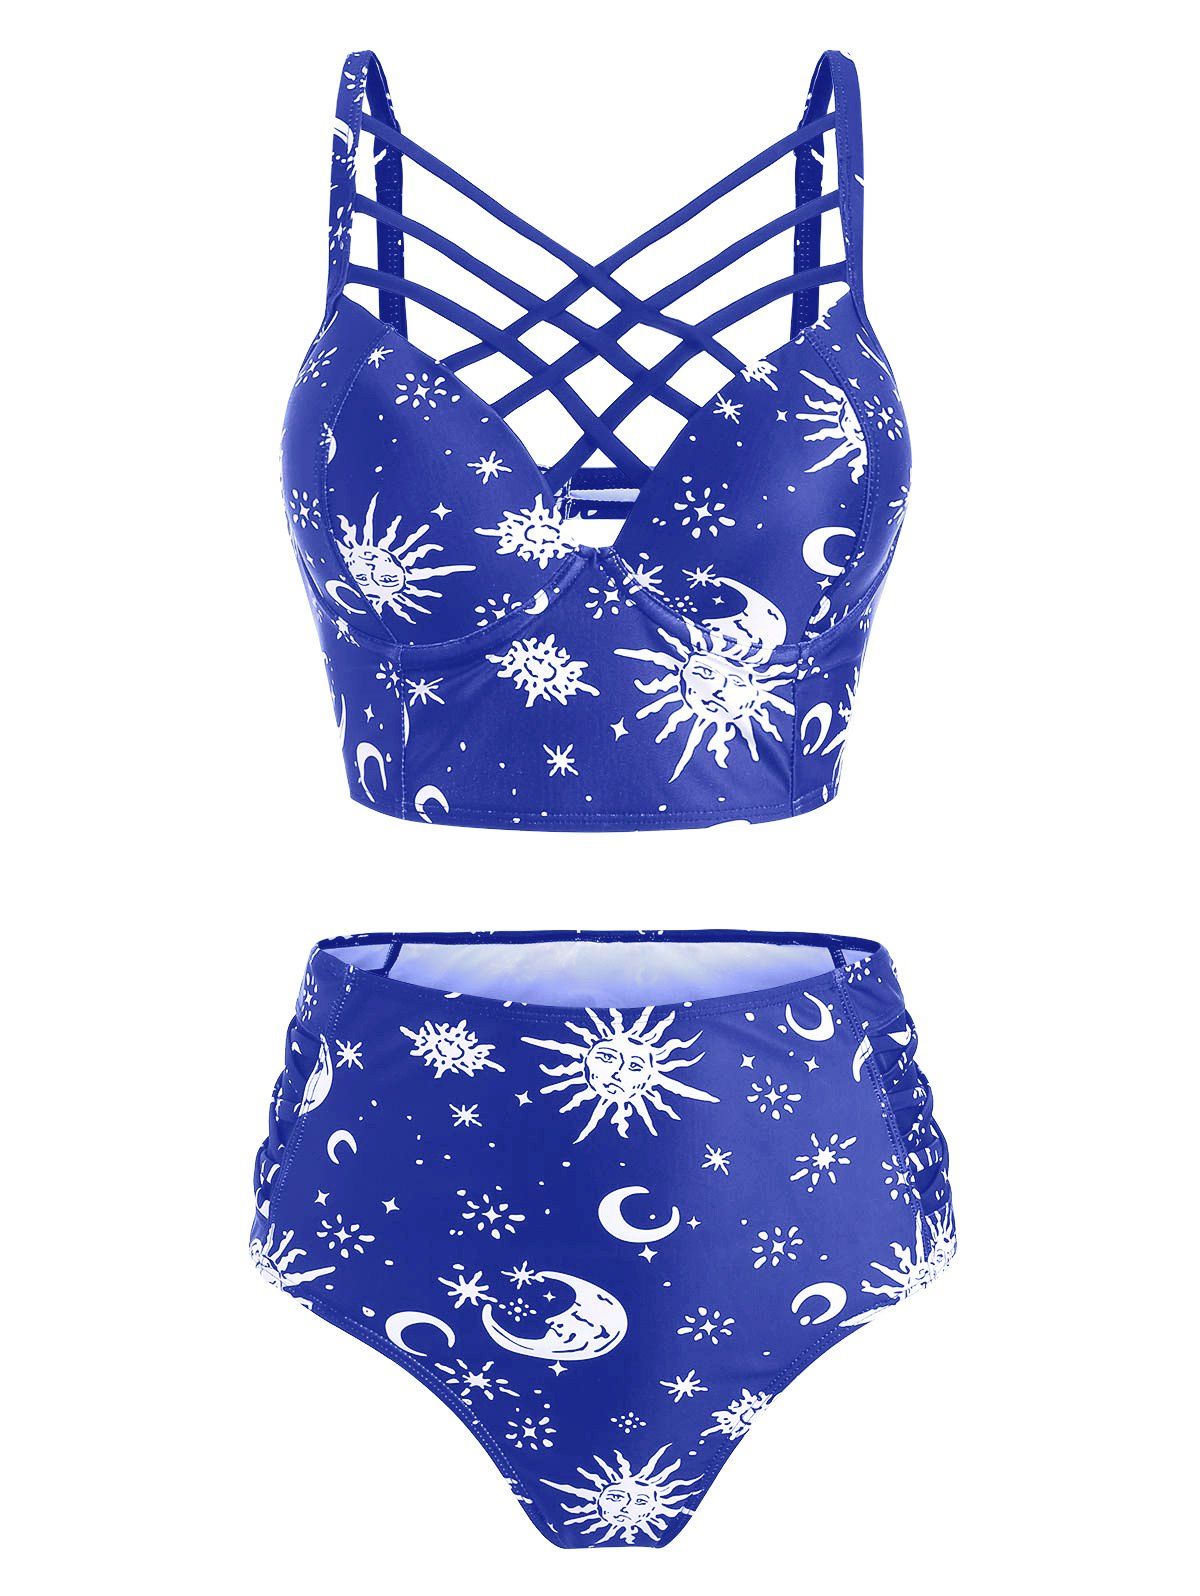 Vintage Tankini Swimsuit Corset Moon Sun Bathing Suit Star Print Lattice Summer Beach Swimwear - DENIM DARK BLUE S